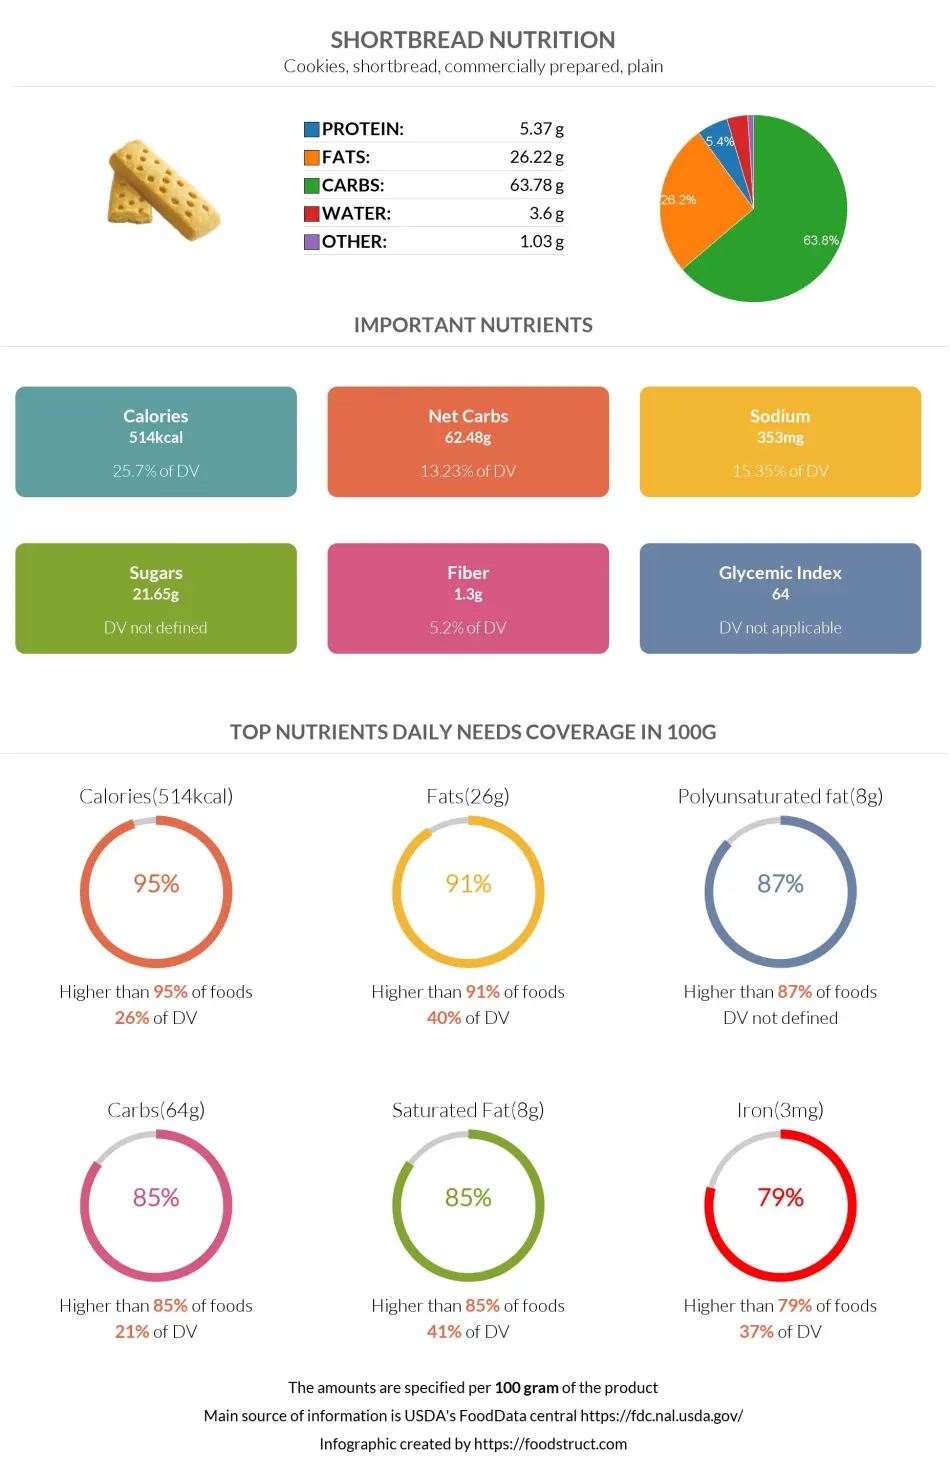 Shortbread nutrition infographic